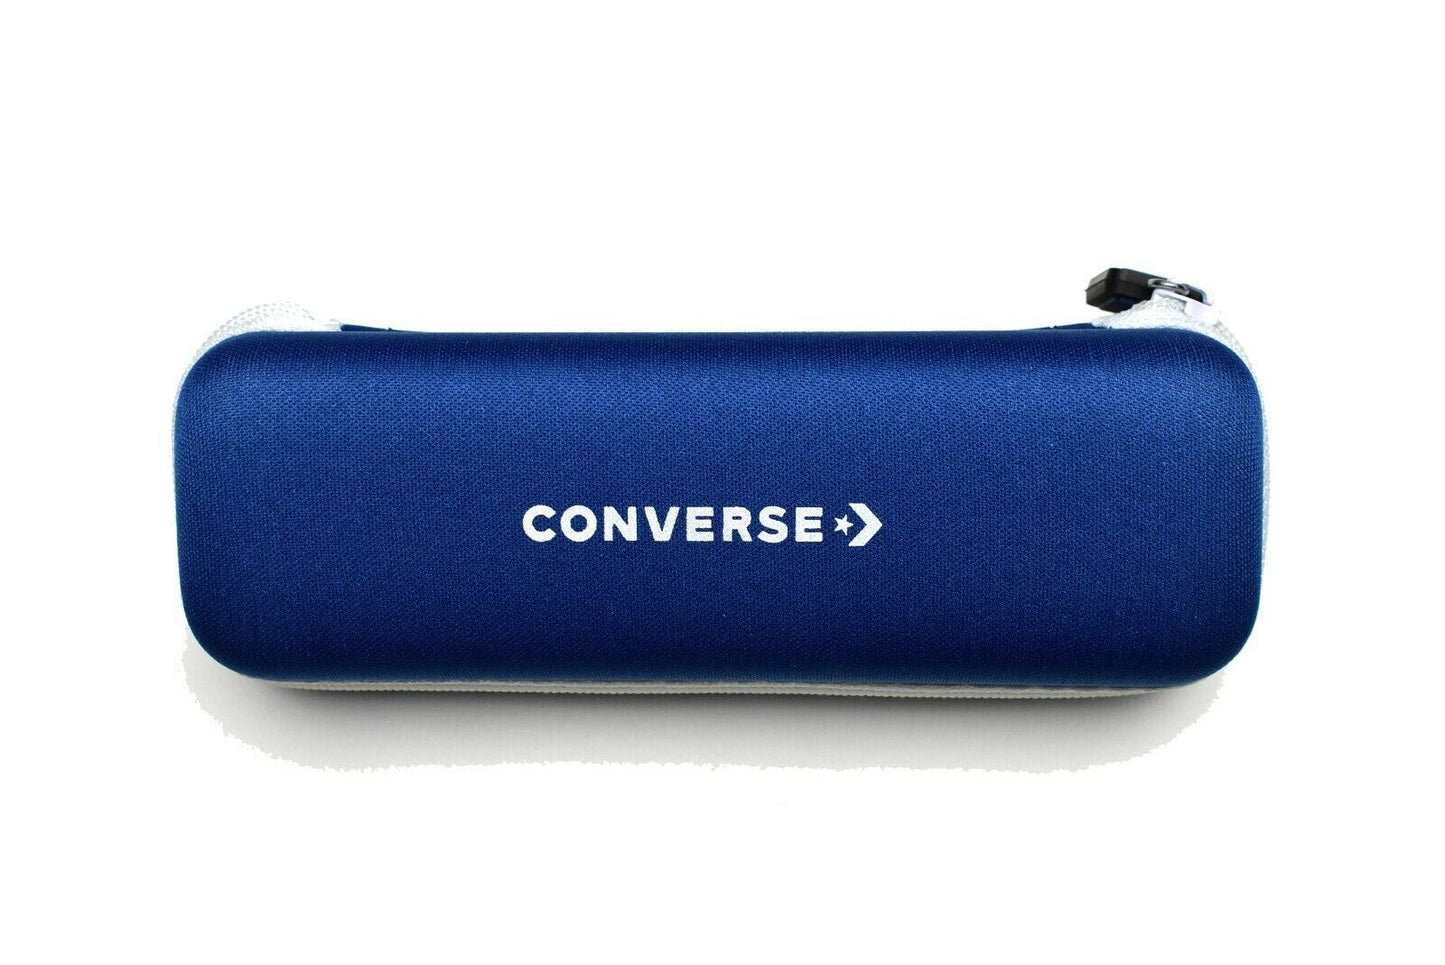 Converse CV5017-450-5317 51mm New Eyeglasses